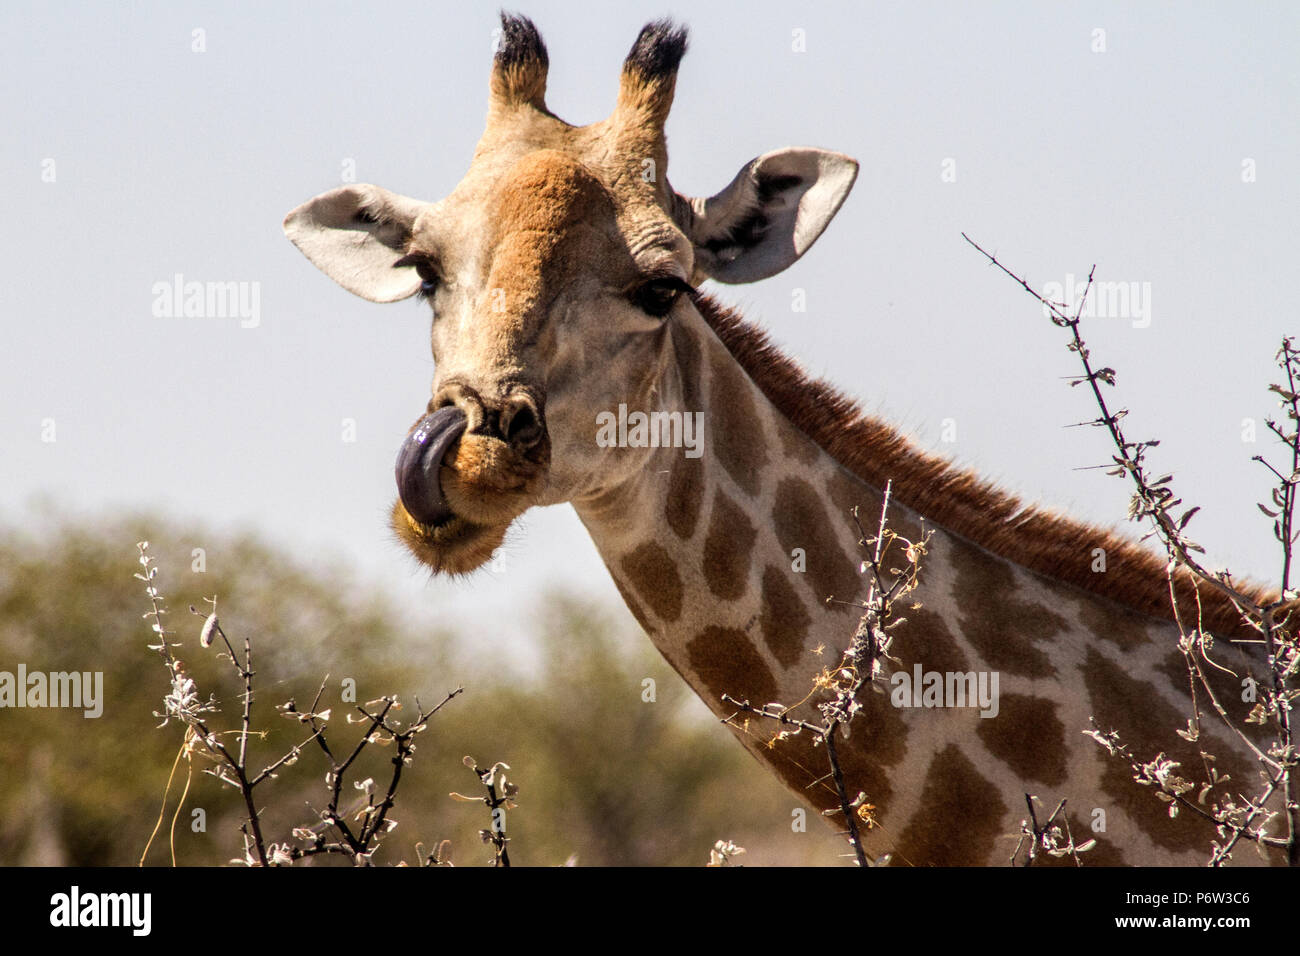 Close up head shot of Namibian or Angolan Giraffe - Giraffa Cameloparalis Angolensis - with tongue out and up nostril in Etosha, Namibia. Stock Photo